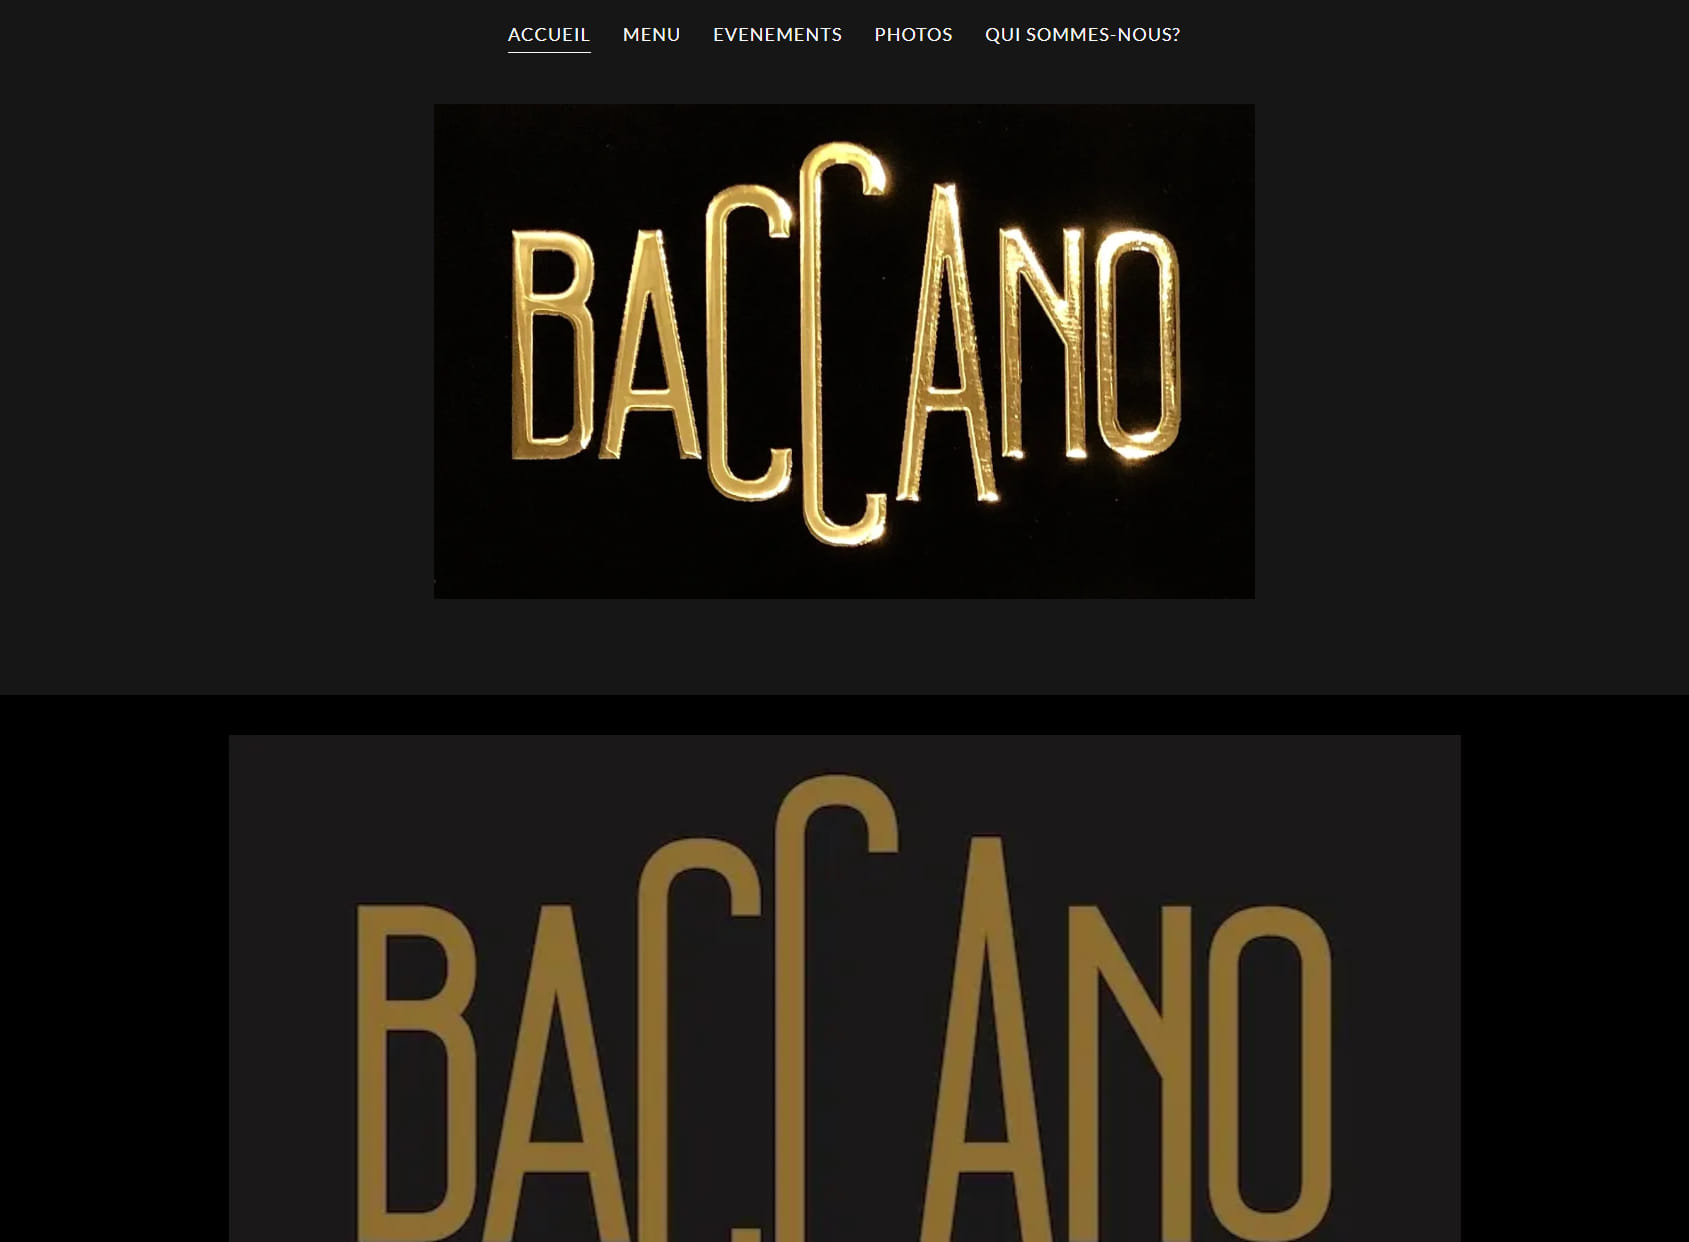 BacCano